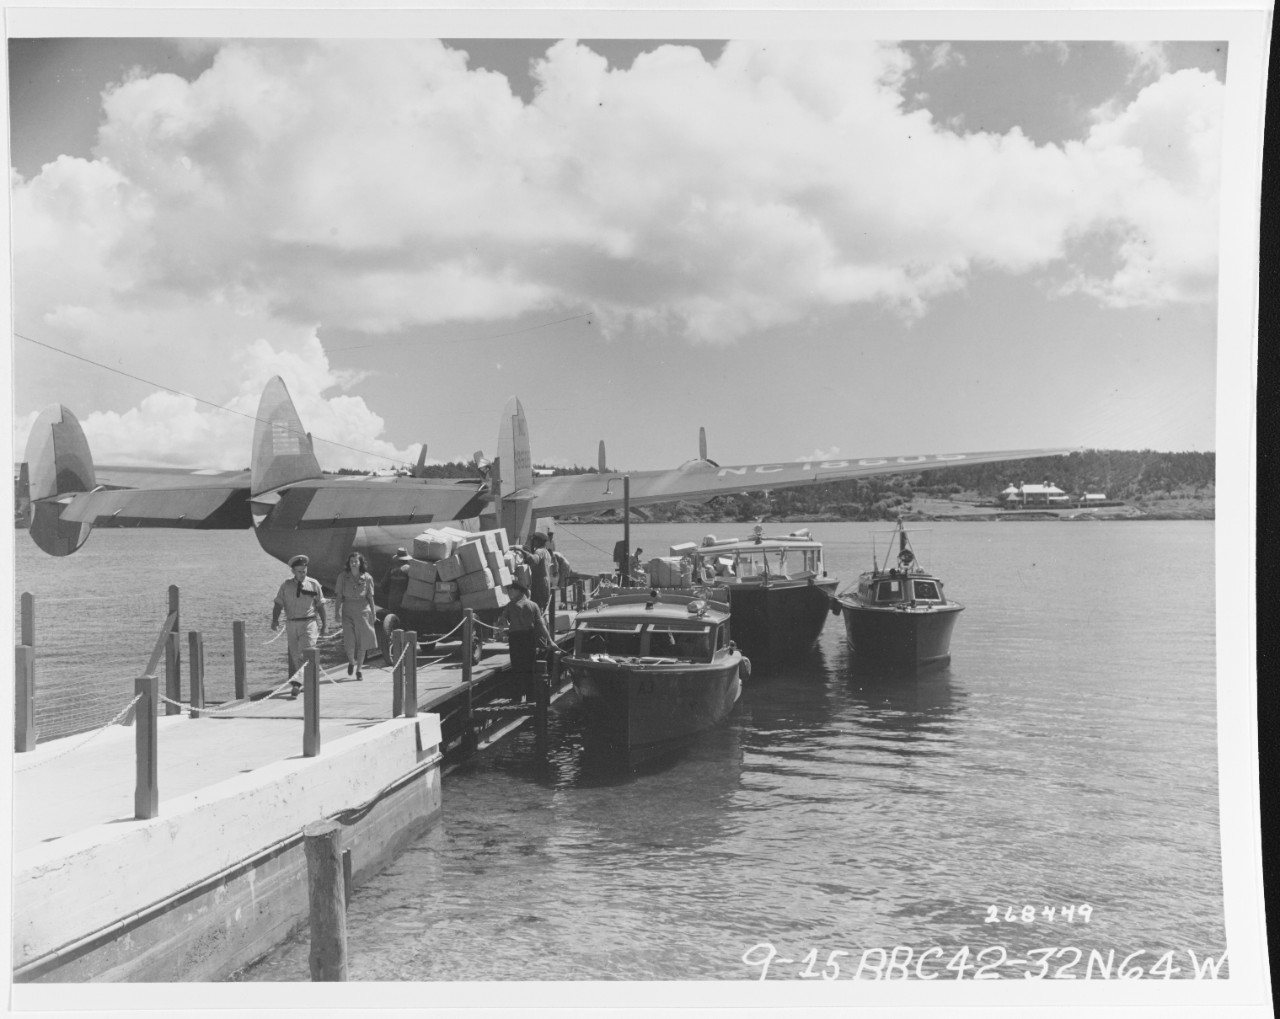 Boeing / Pan American Airways Model 314 "CLIPPER" docked at Darrell's Island, Bermuda, on September 18, 1942